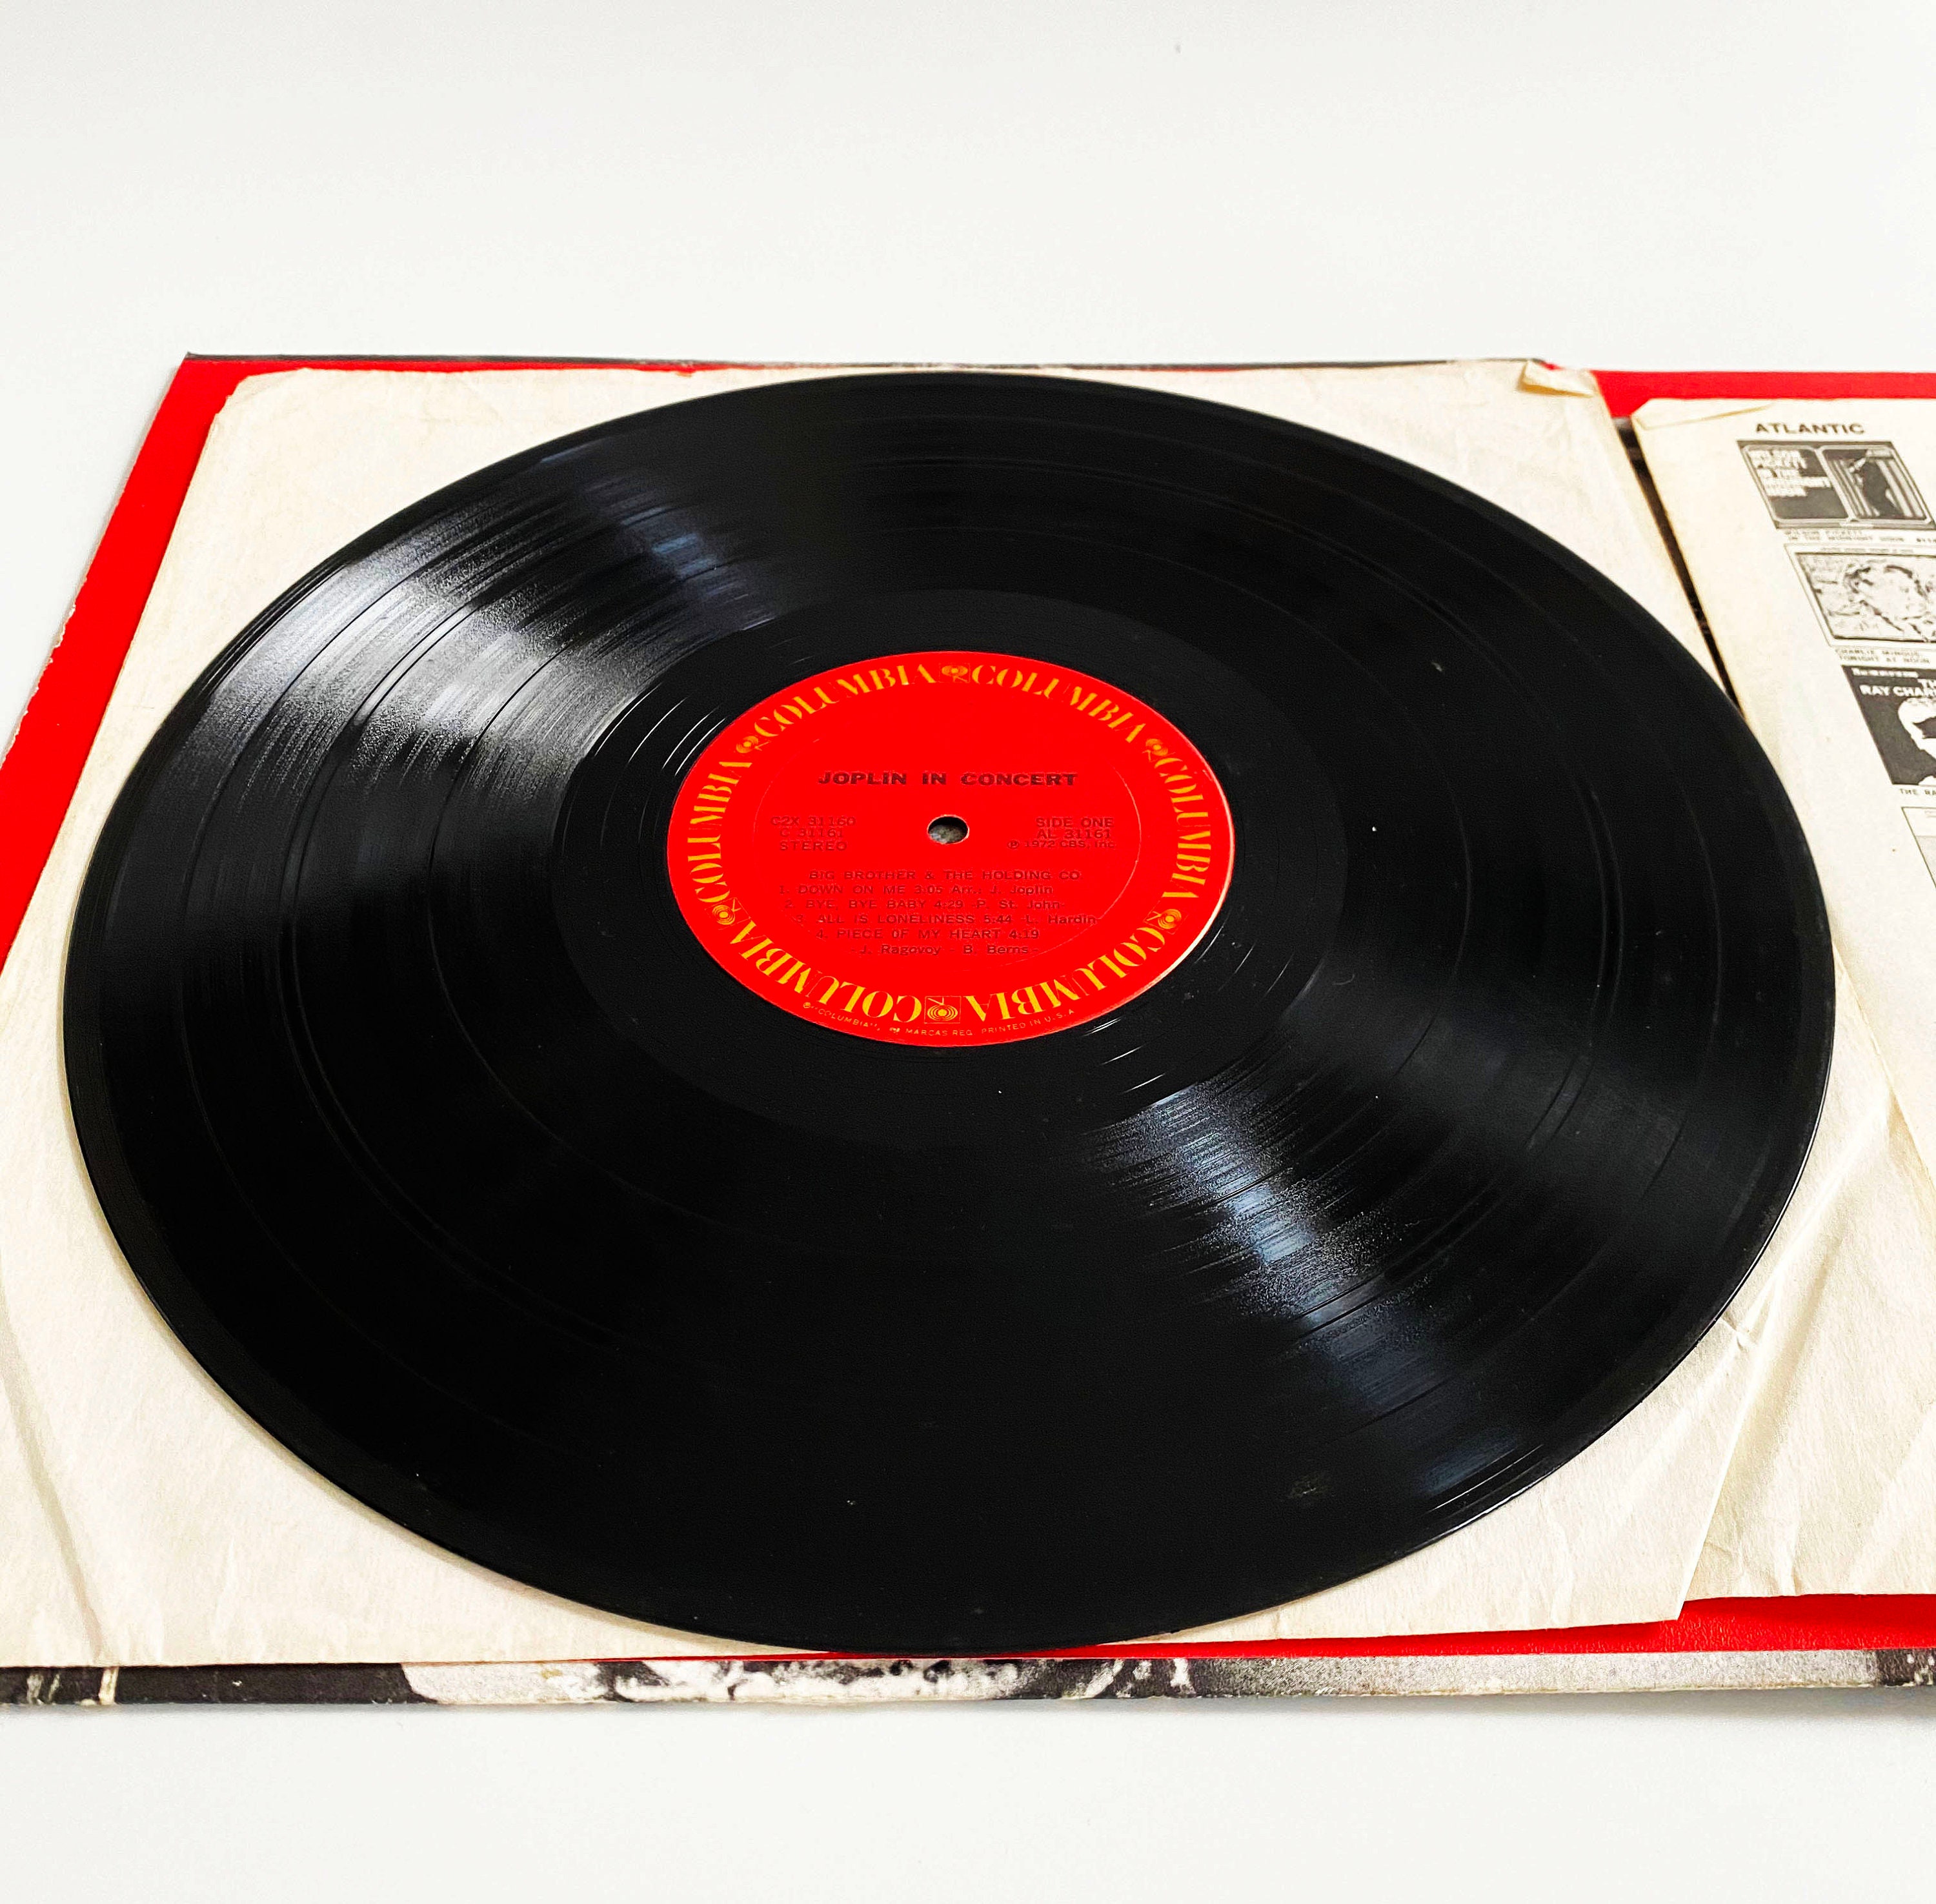 Pygmalion Bitterhed ryste Vintage Original Janis Joplin in Concert Live Vinyl Album - Etsy